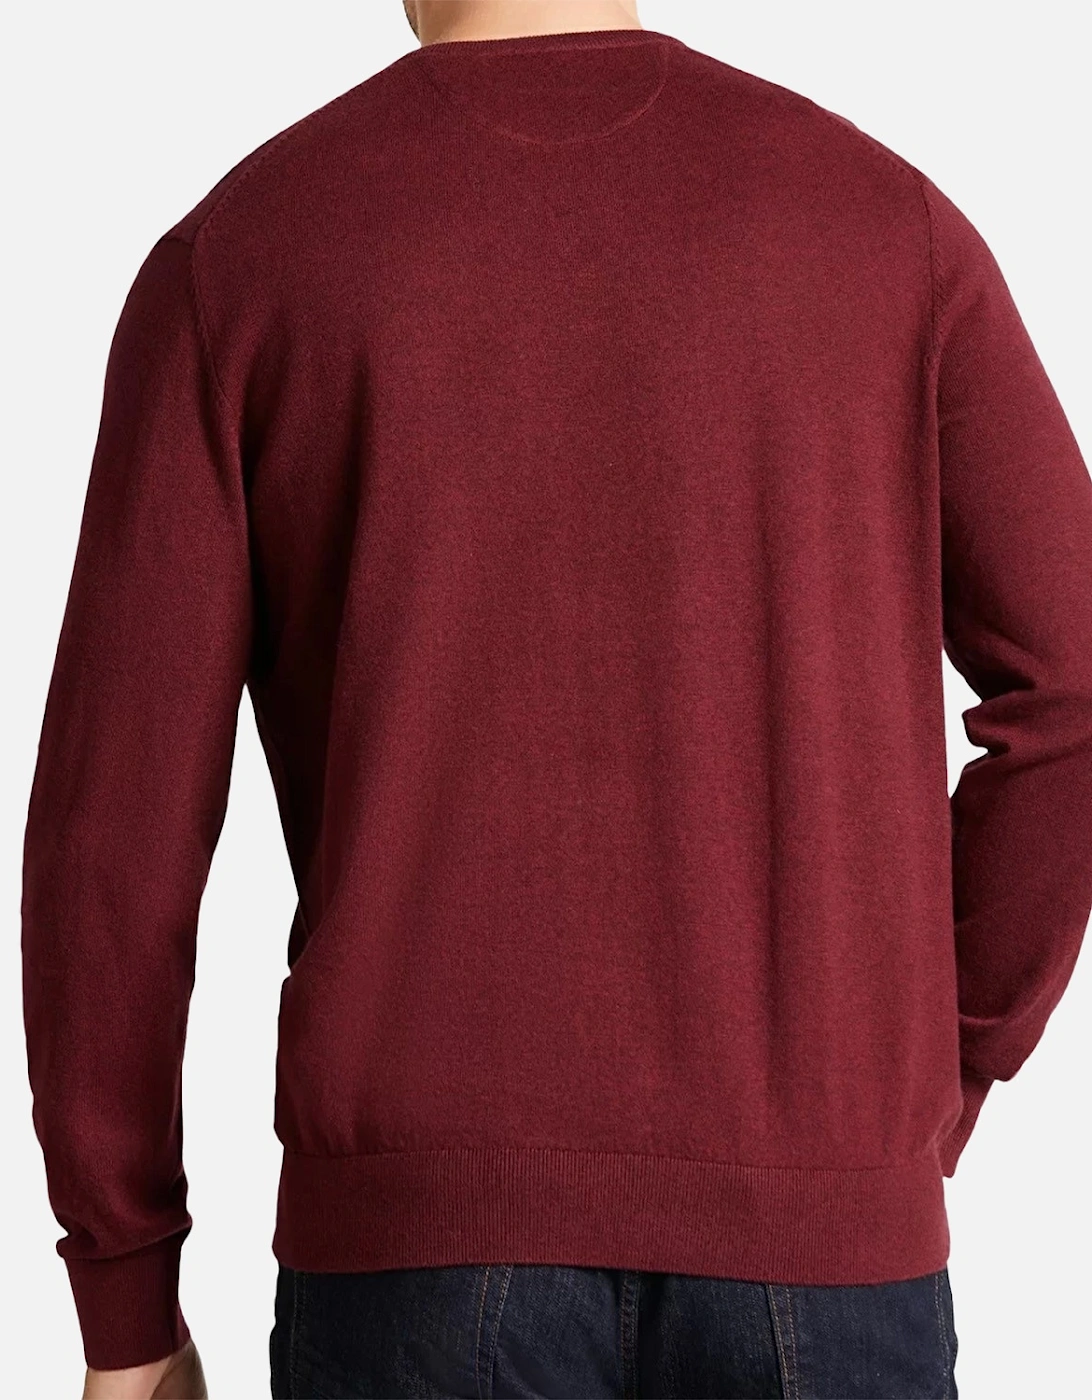 Mens Cotton Cashmere V Neck Sweatshirt (Wine)